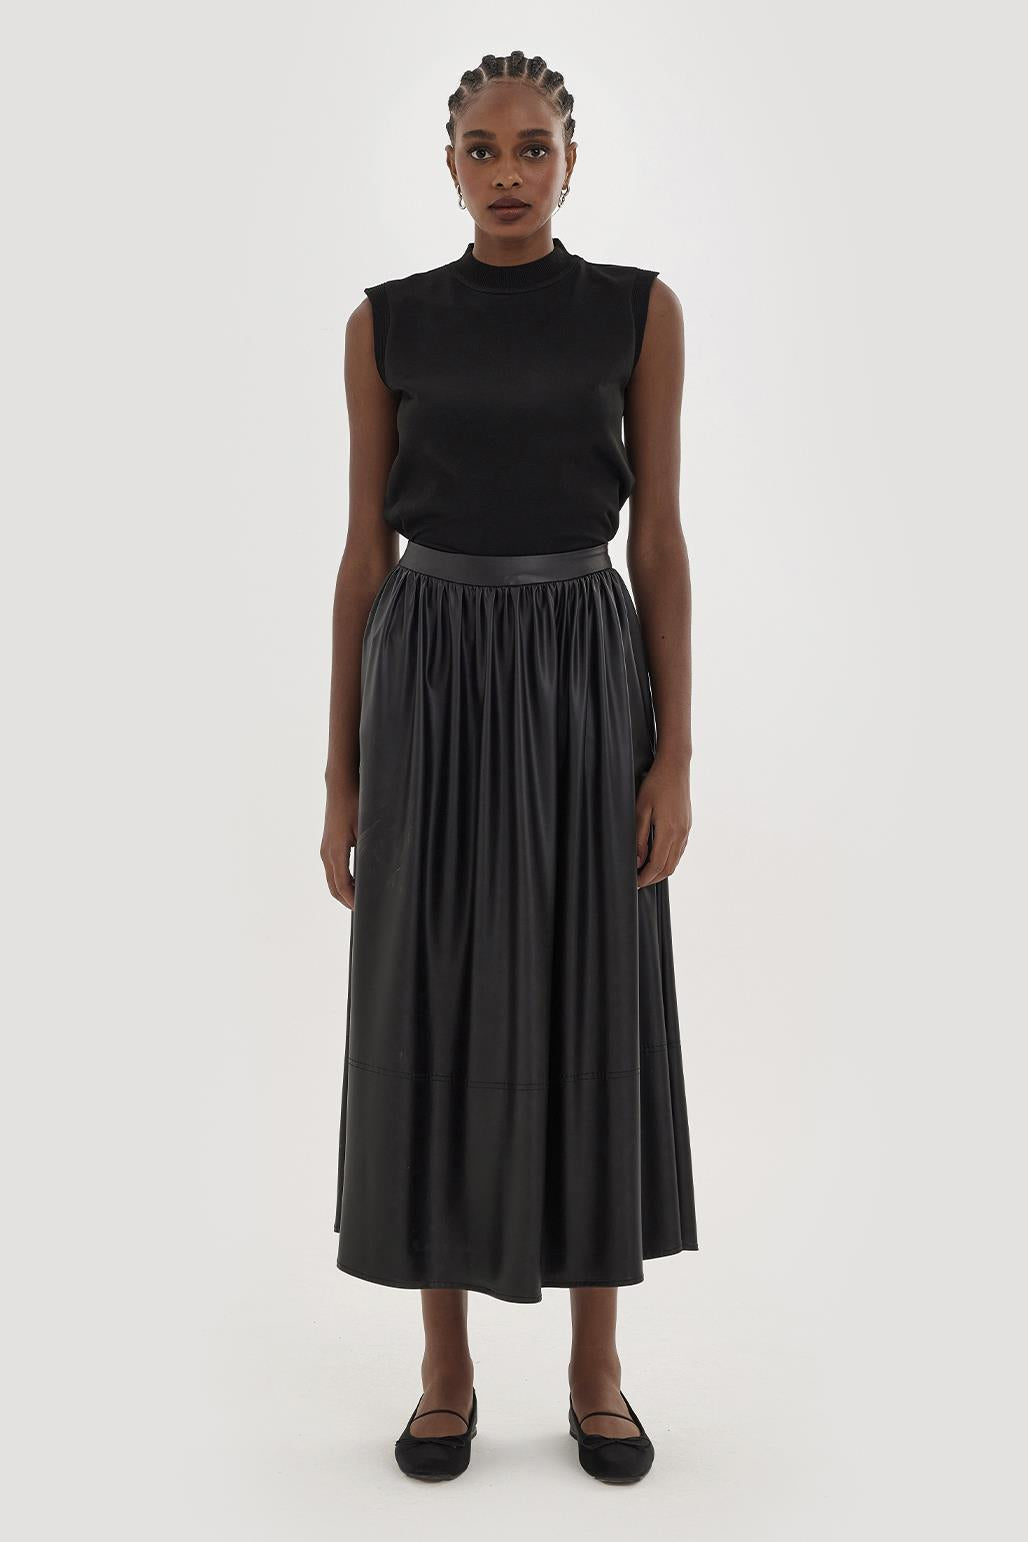 Shirred Soft Leather Skirt Black